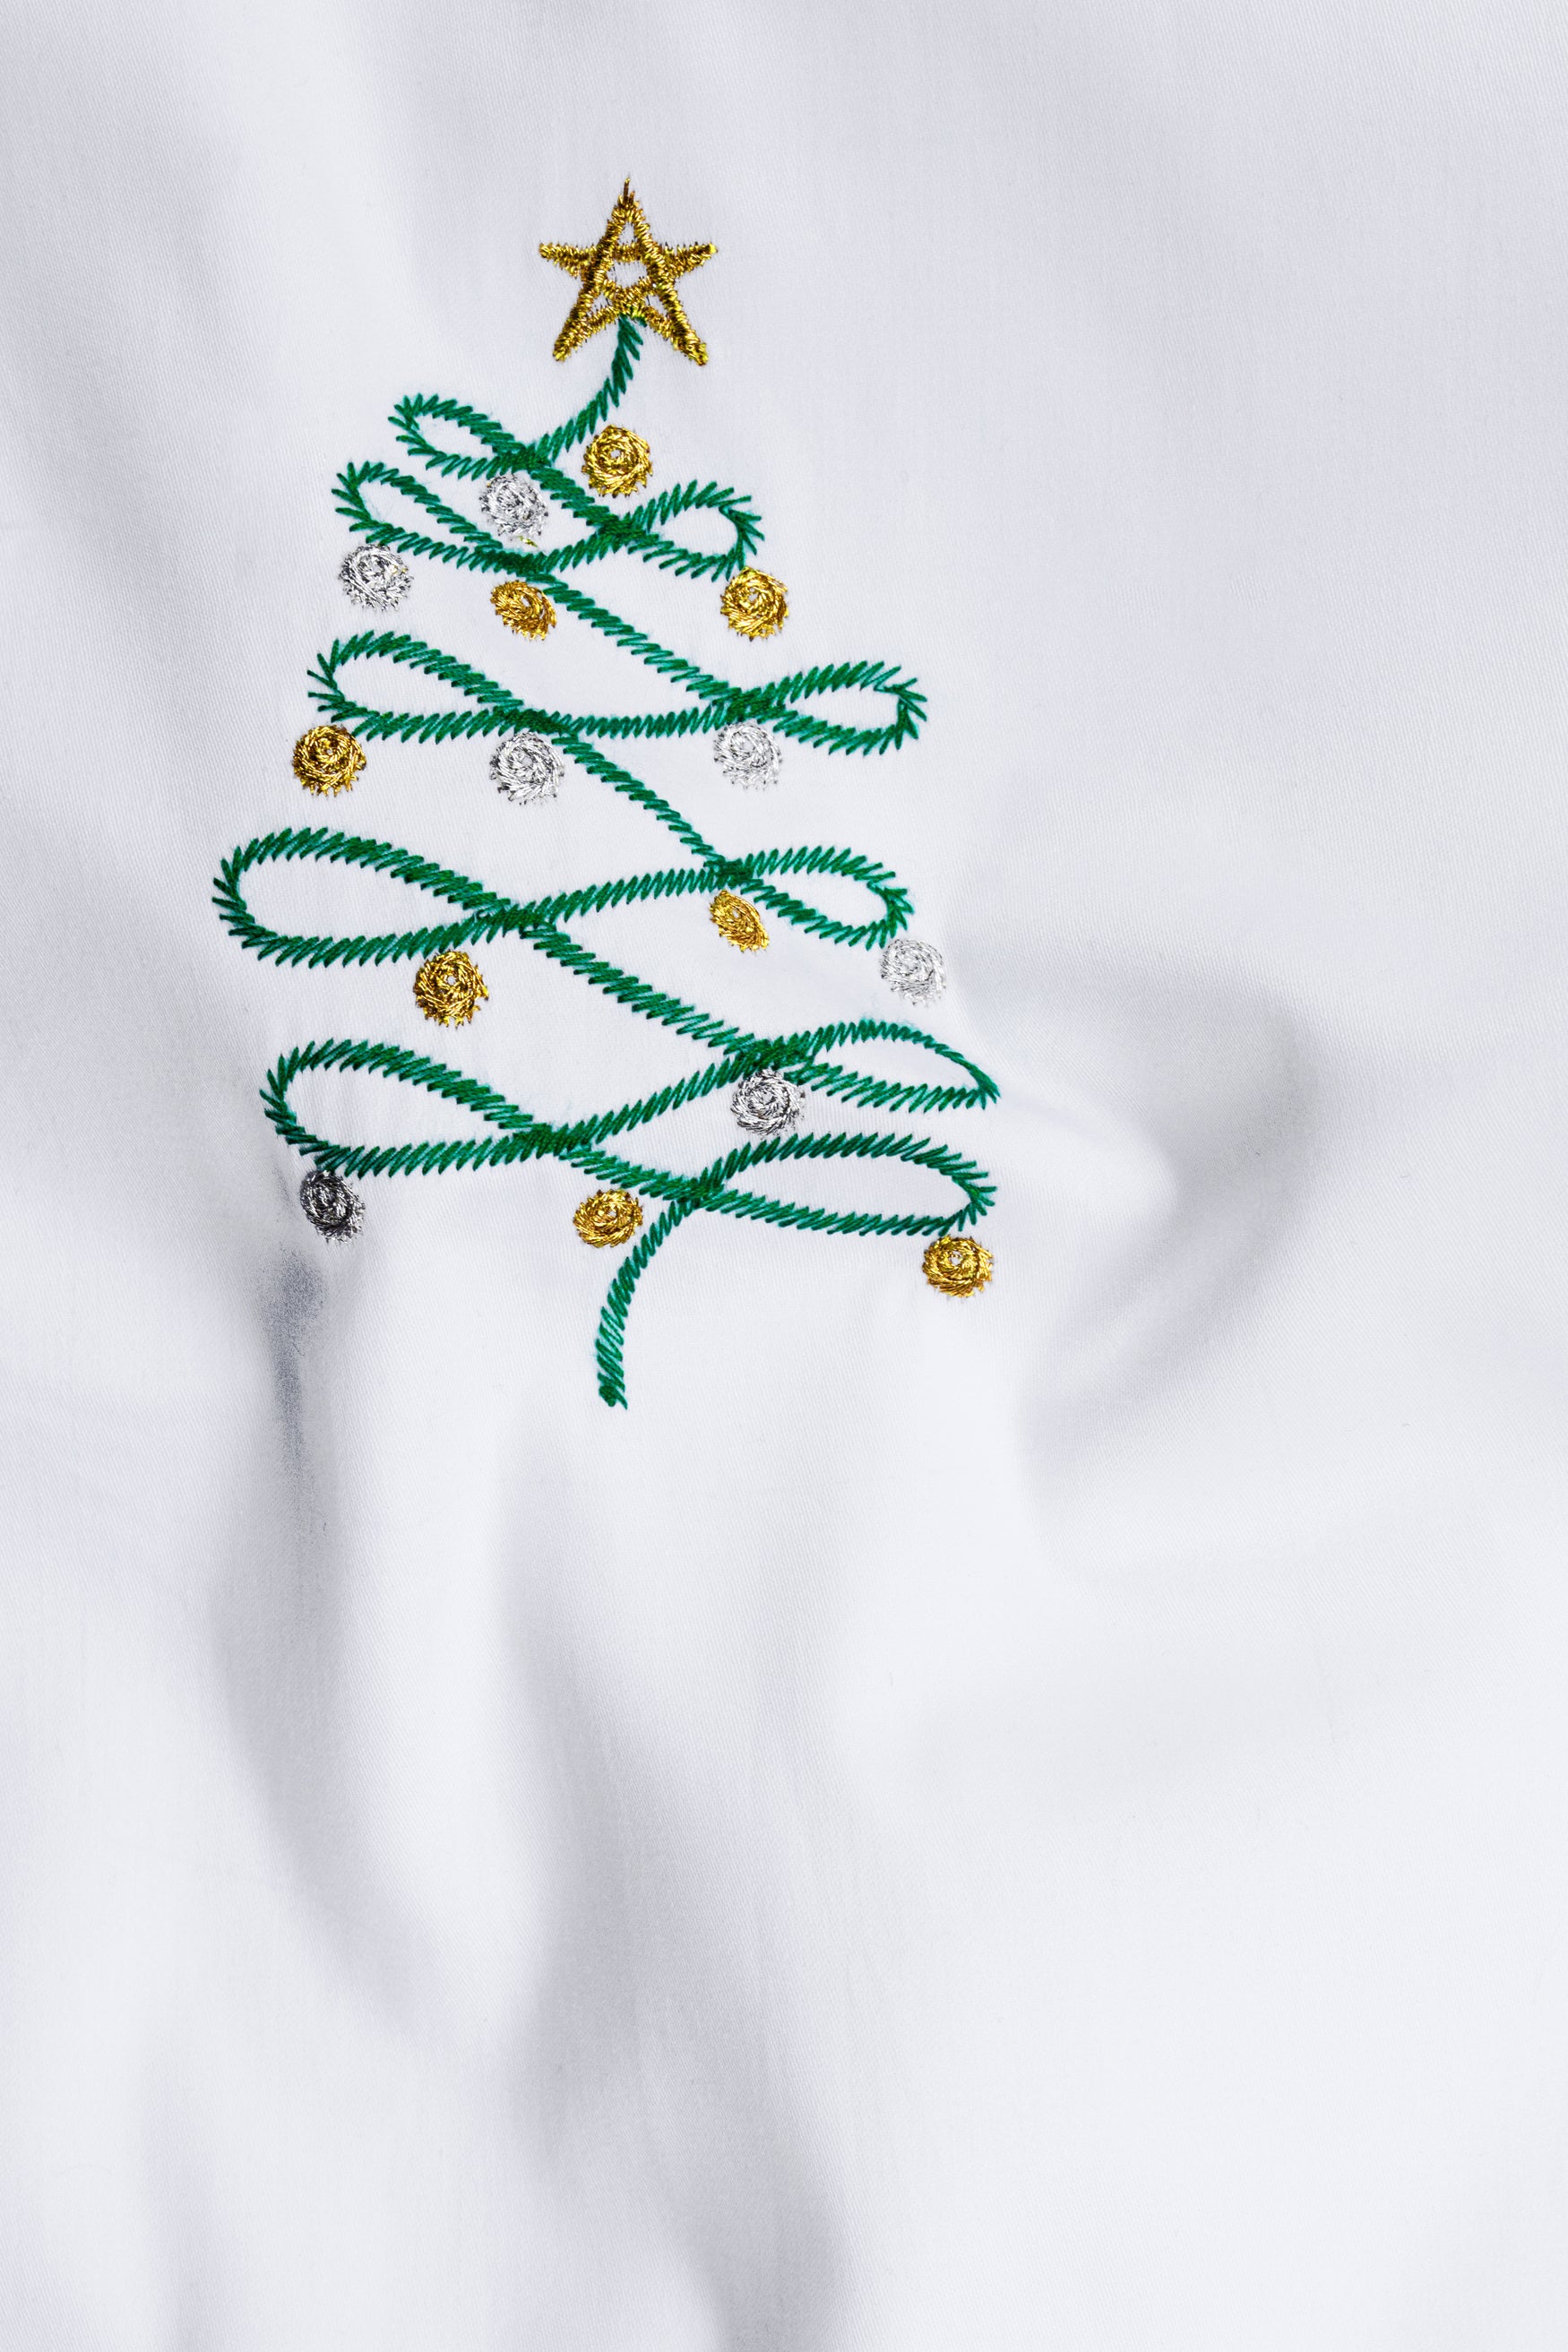 Bright White with Unique Christmas Tree Embroidered Subtle Sheen Super Soft Premium Cotton Designer Shirt 12225-NP-E378-38, 12225-NP-E378-H-38, 12225-NP-E378-39, 12225-NP-E378-H-39, 12225-NP-E378-40, 12225-NP-E378-H-40, 12225-NP-E378-42, 12225-NP-E378-H-42, 12225-NP-E378-44, 12225-NP-E378-H-44, 12225-NP-E378-46, 12225-NP-E378-H-46, 12225-NP-E378-48, 12225-NP-E378-H-48, 12225-NP-E378-50, 12225-NP-E378-H-50, 12225-NP-E378-52, 12225-NP-E378-H-52